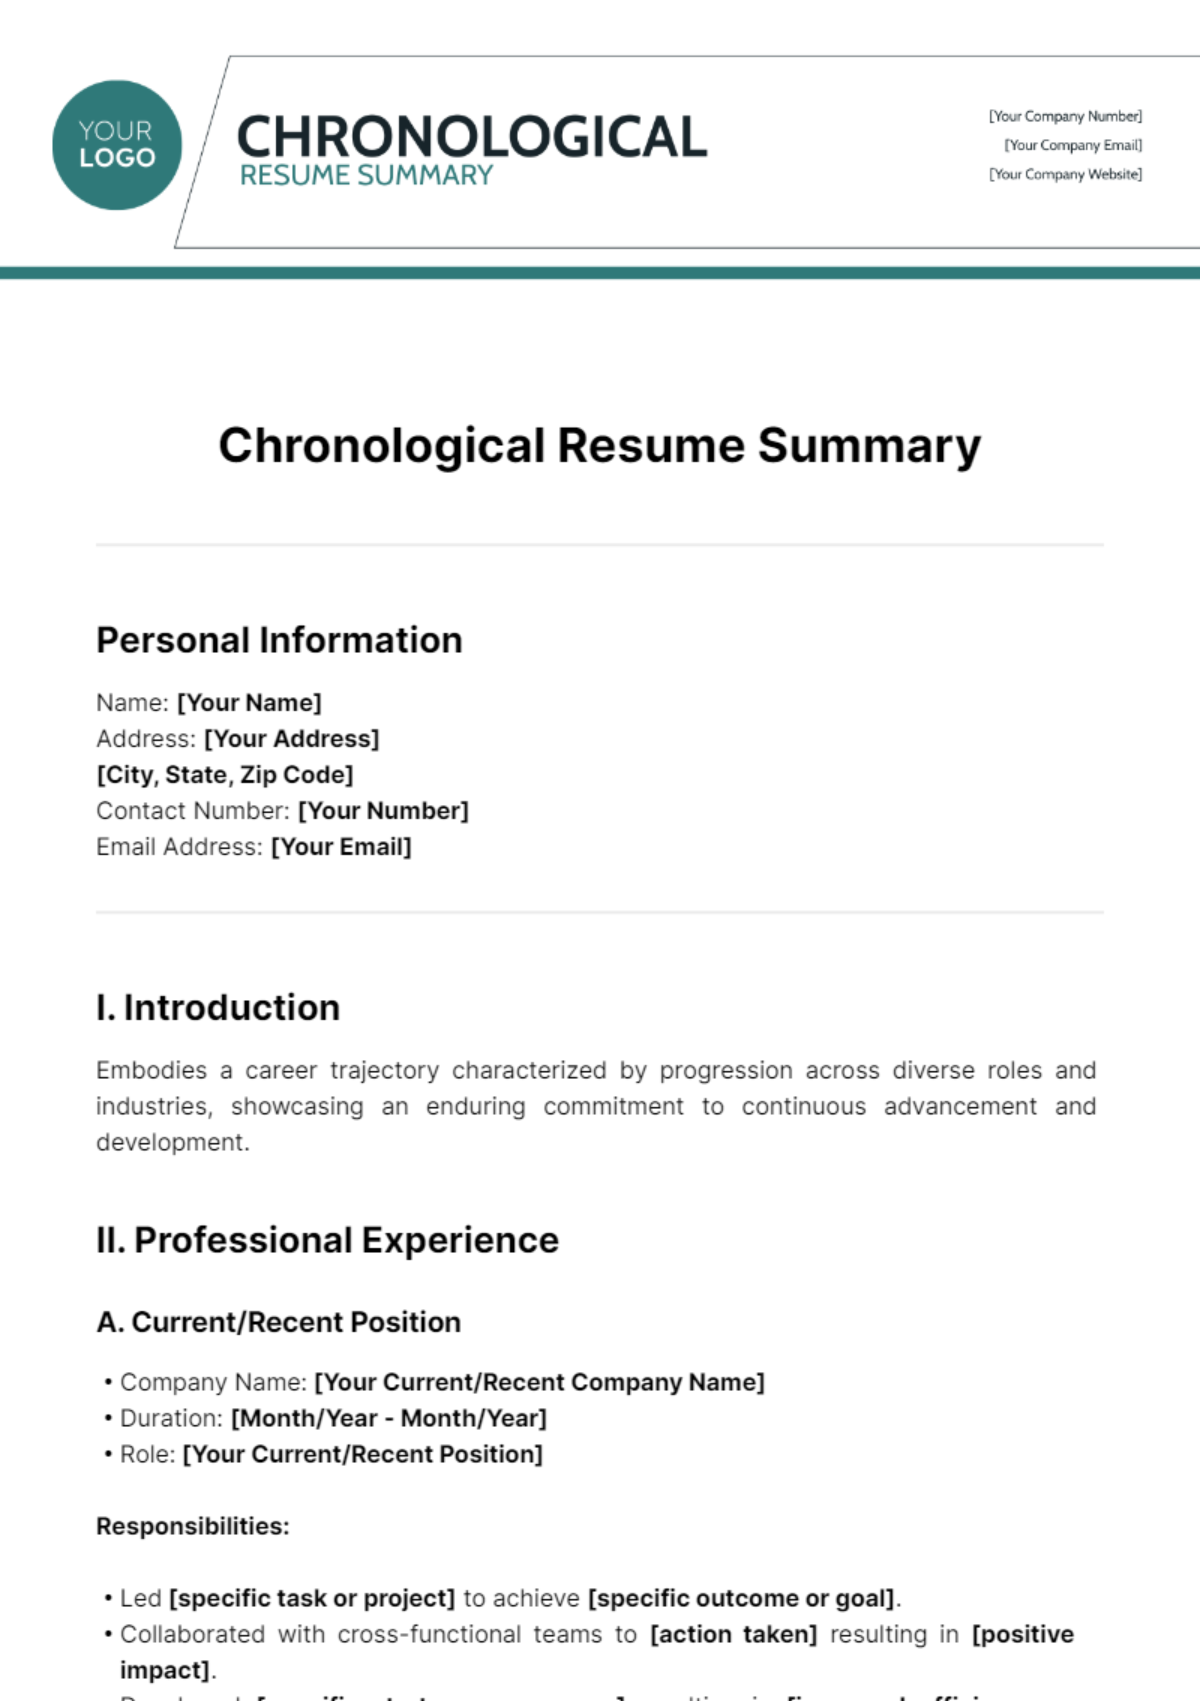 Chronological Resume Summary Template